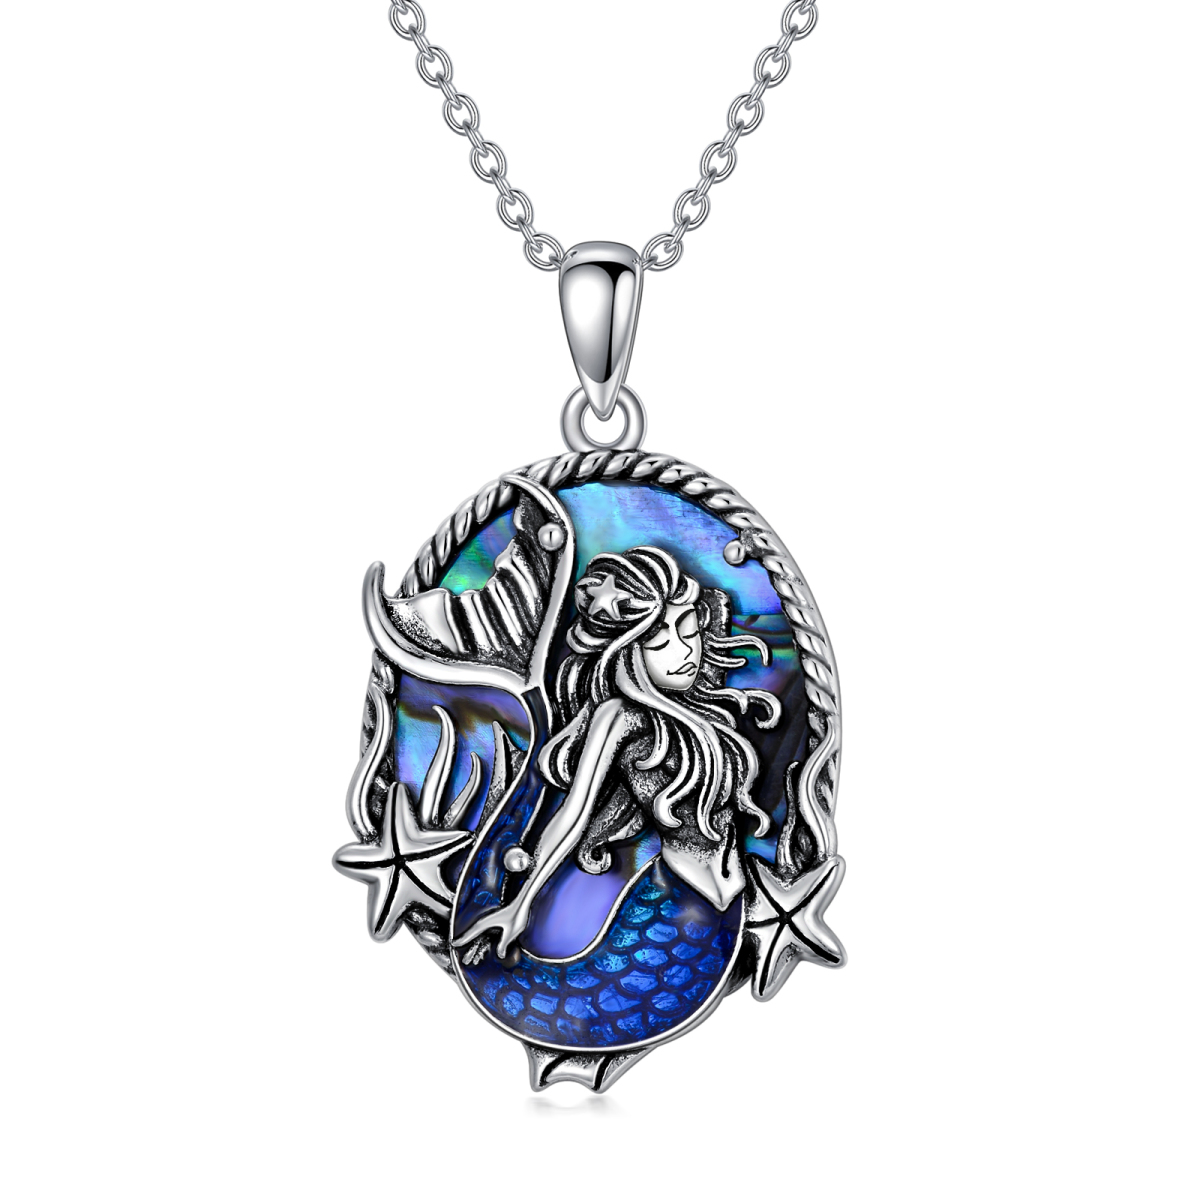 Halskette mit Meerjungfrau-Anhänger, oval, Abalone-Muschel, Sterlingsilber-1